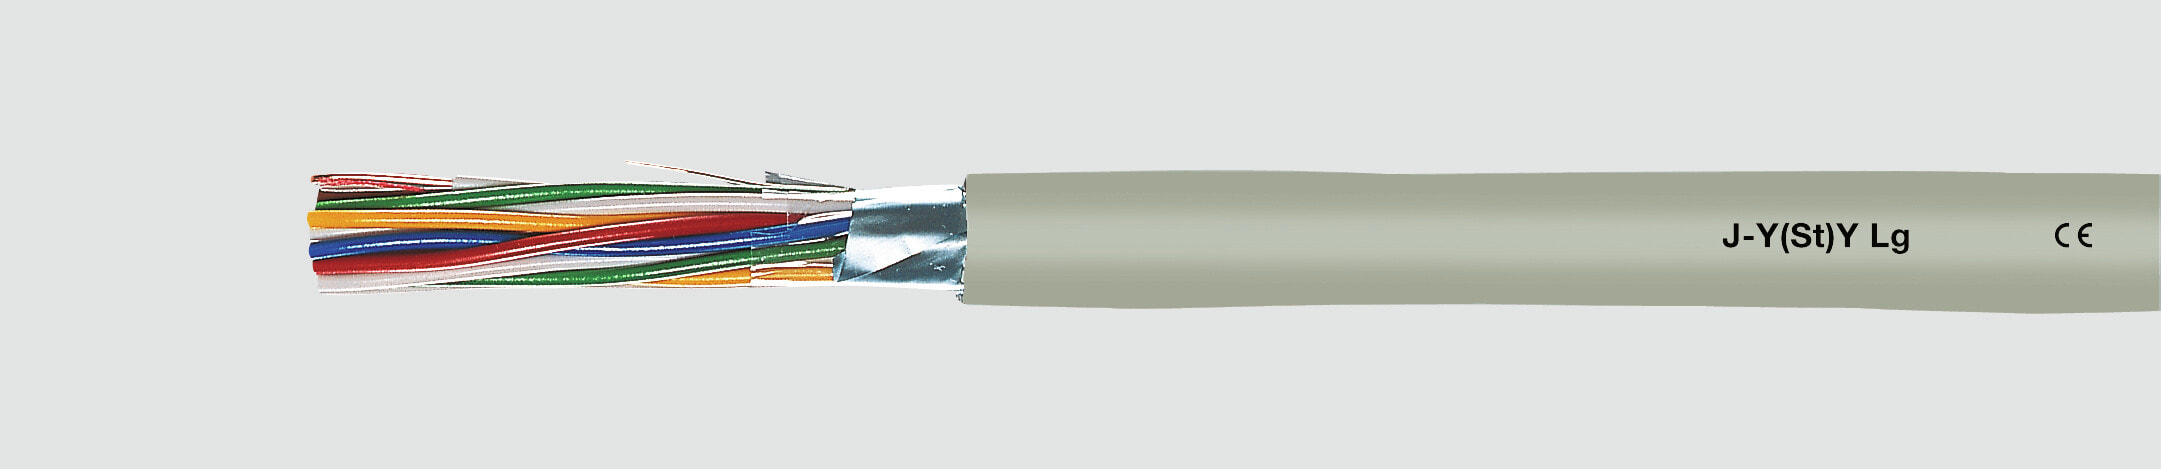 Helukabel 33004 - Low voltage cable - Grey - Polyvinyl chloride (PVC) - Cooper - 0.6 mm² - 30 kg/km